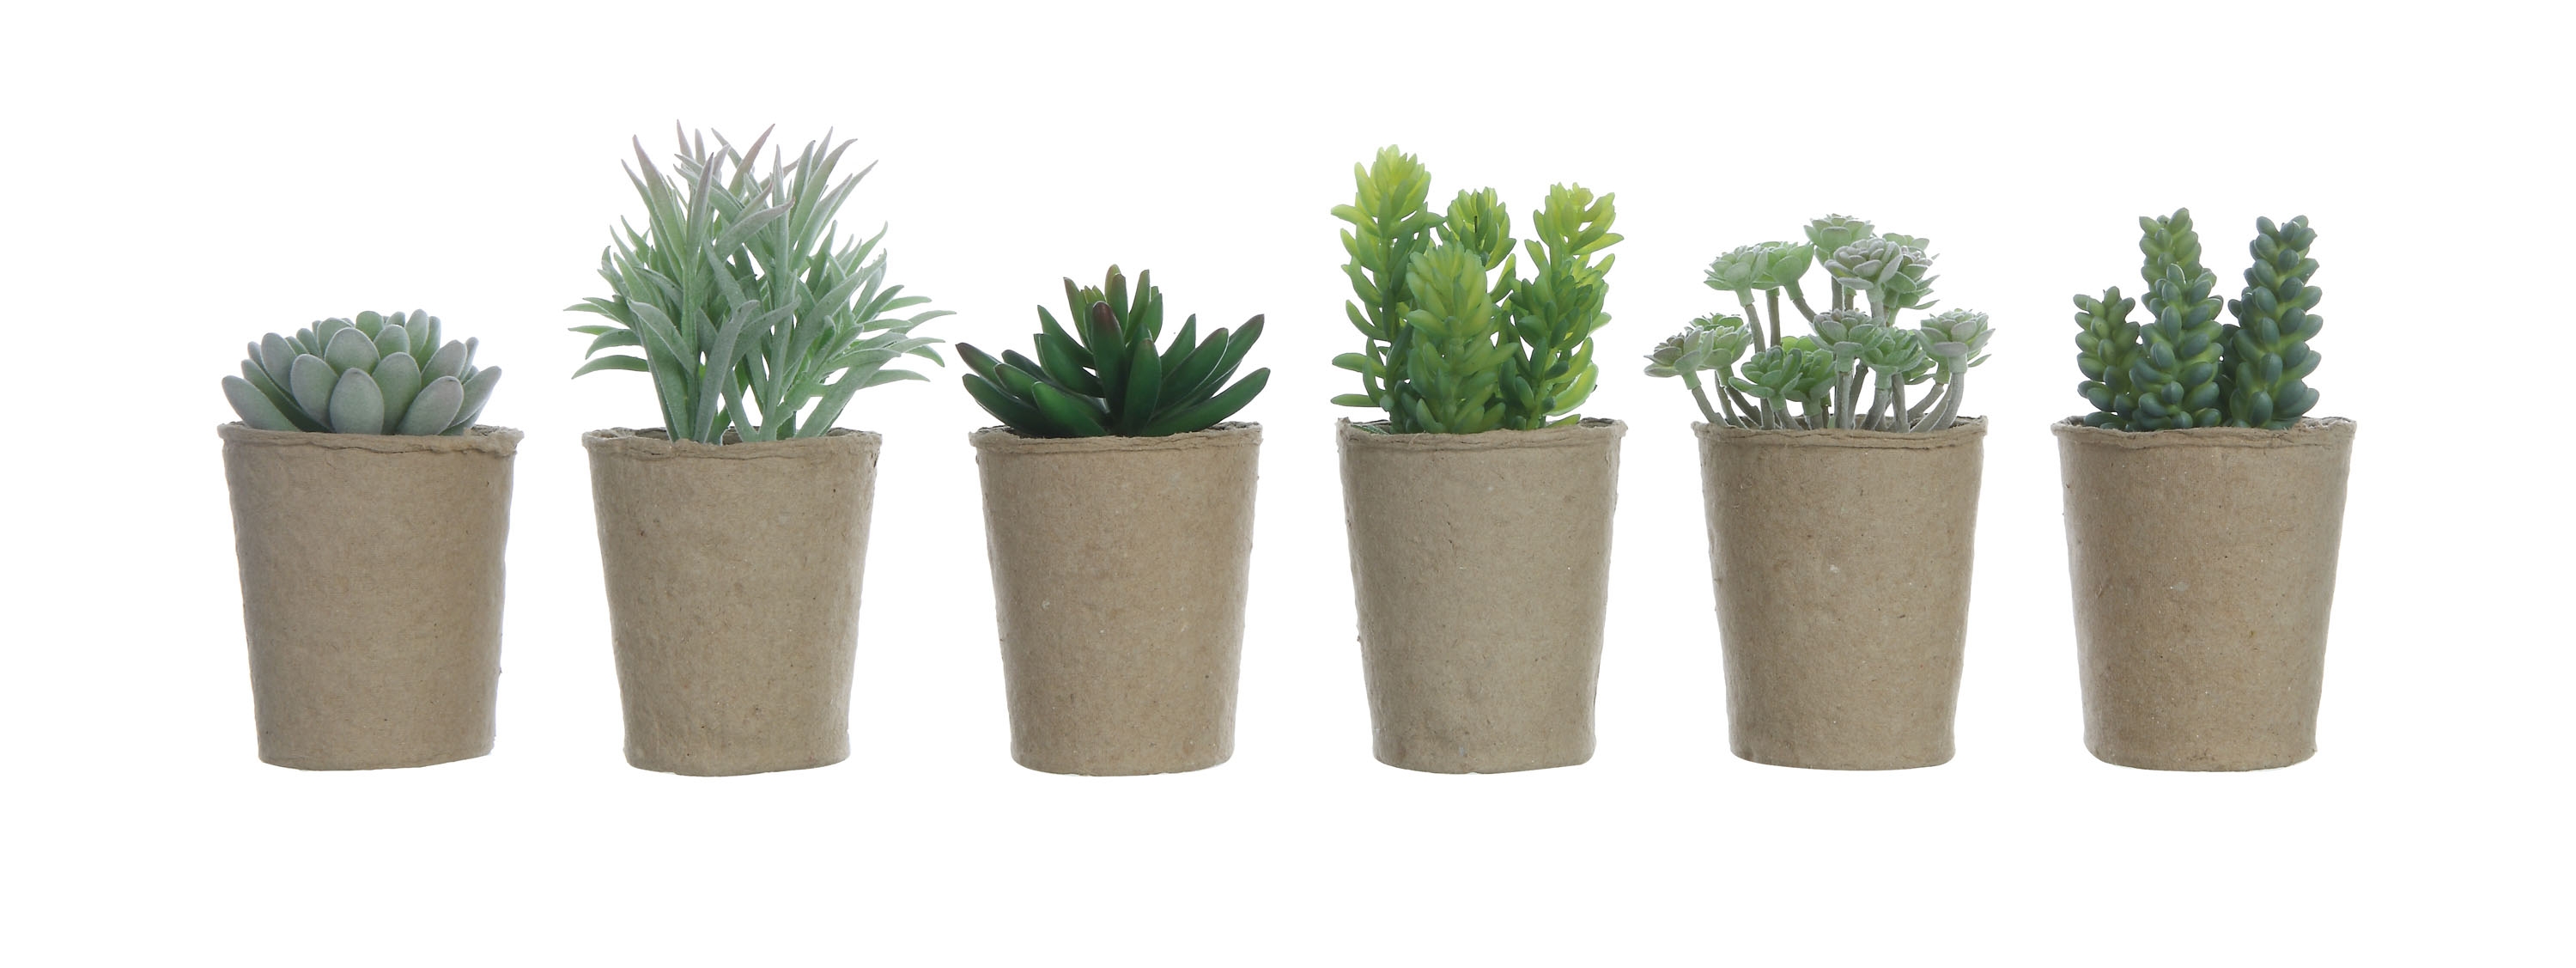 Faux Succulent in Paper Pot (6 Styles) - Image 0